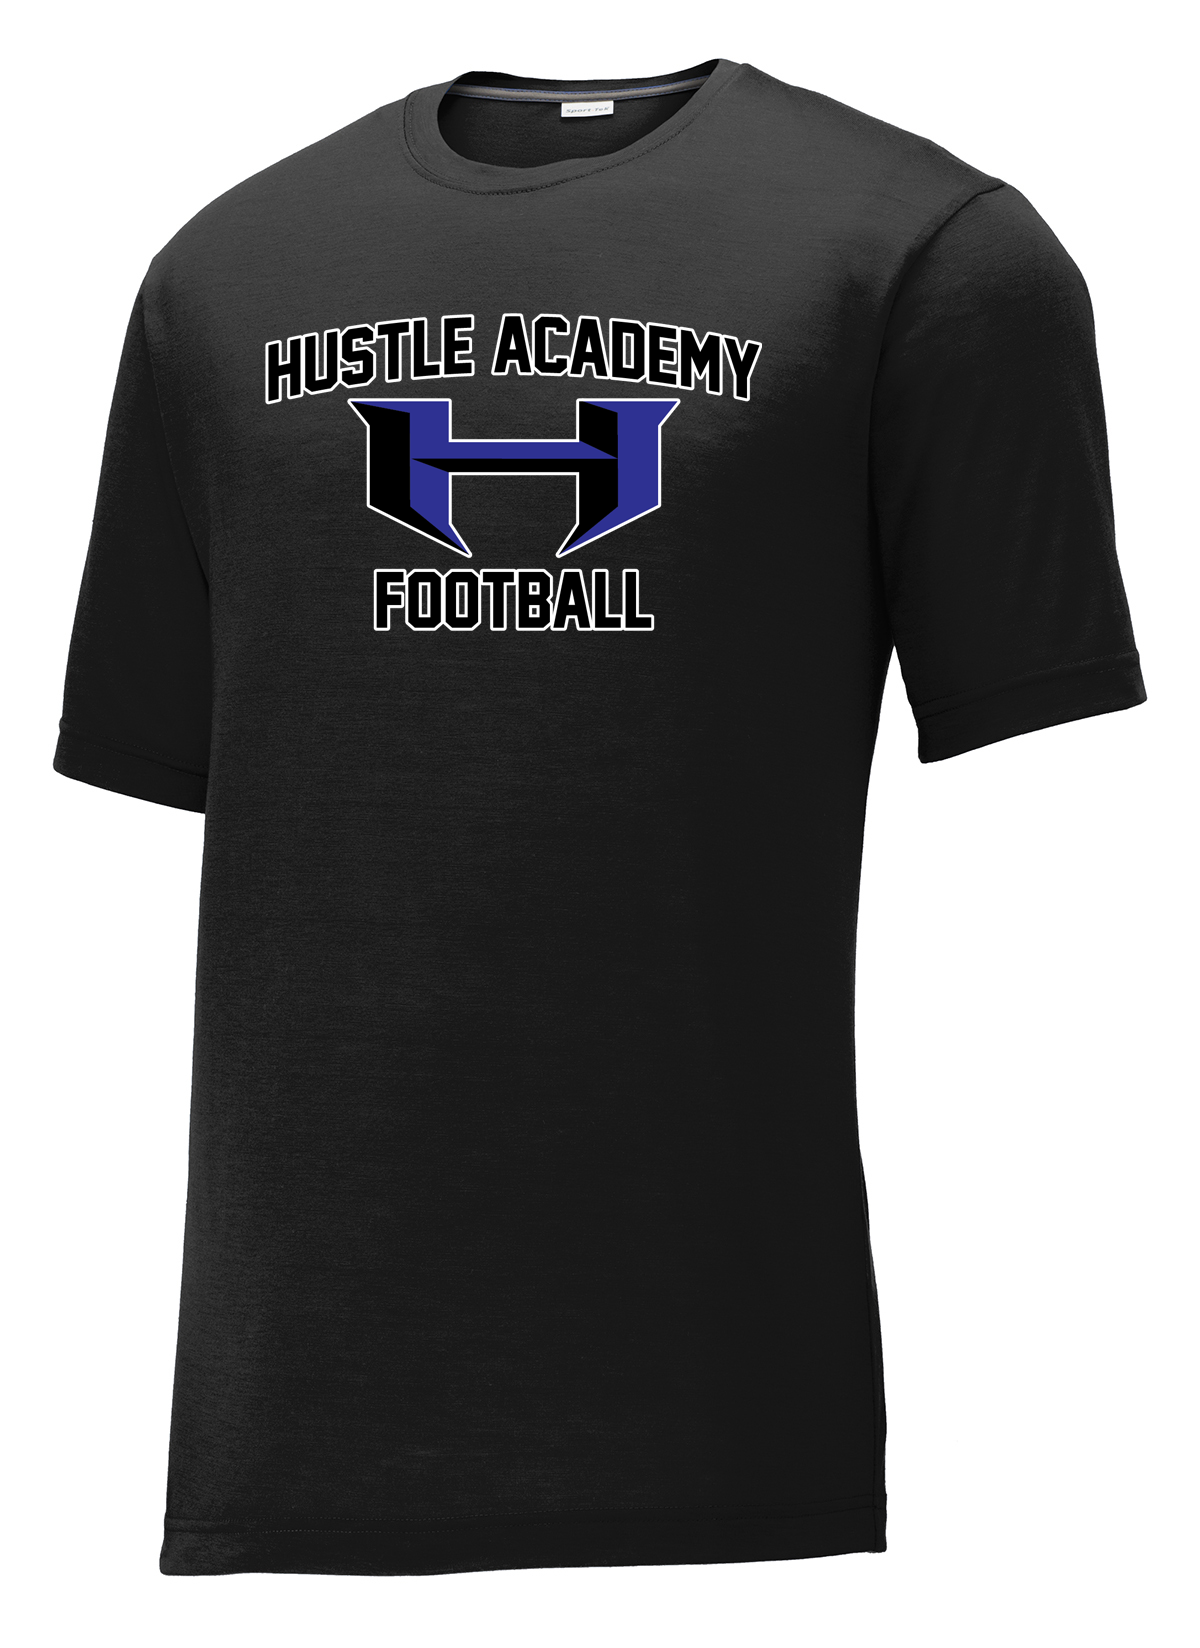 Hustle Academy Football CottonTouch Performance T-Shirt